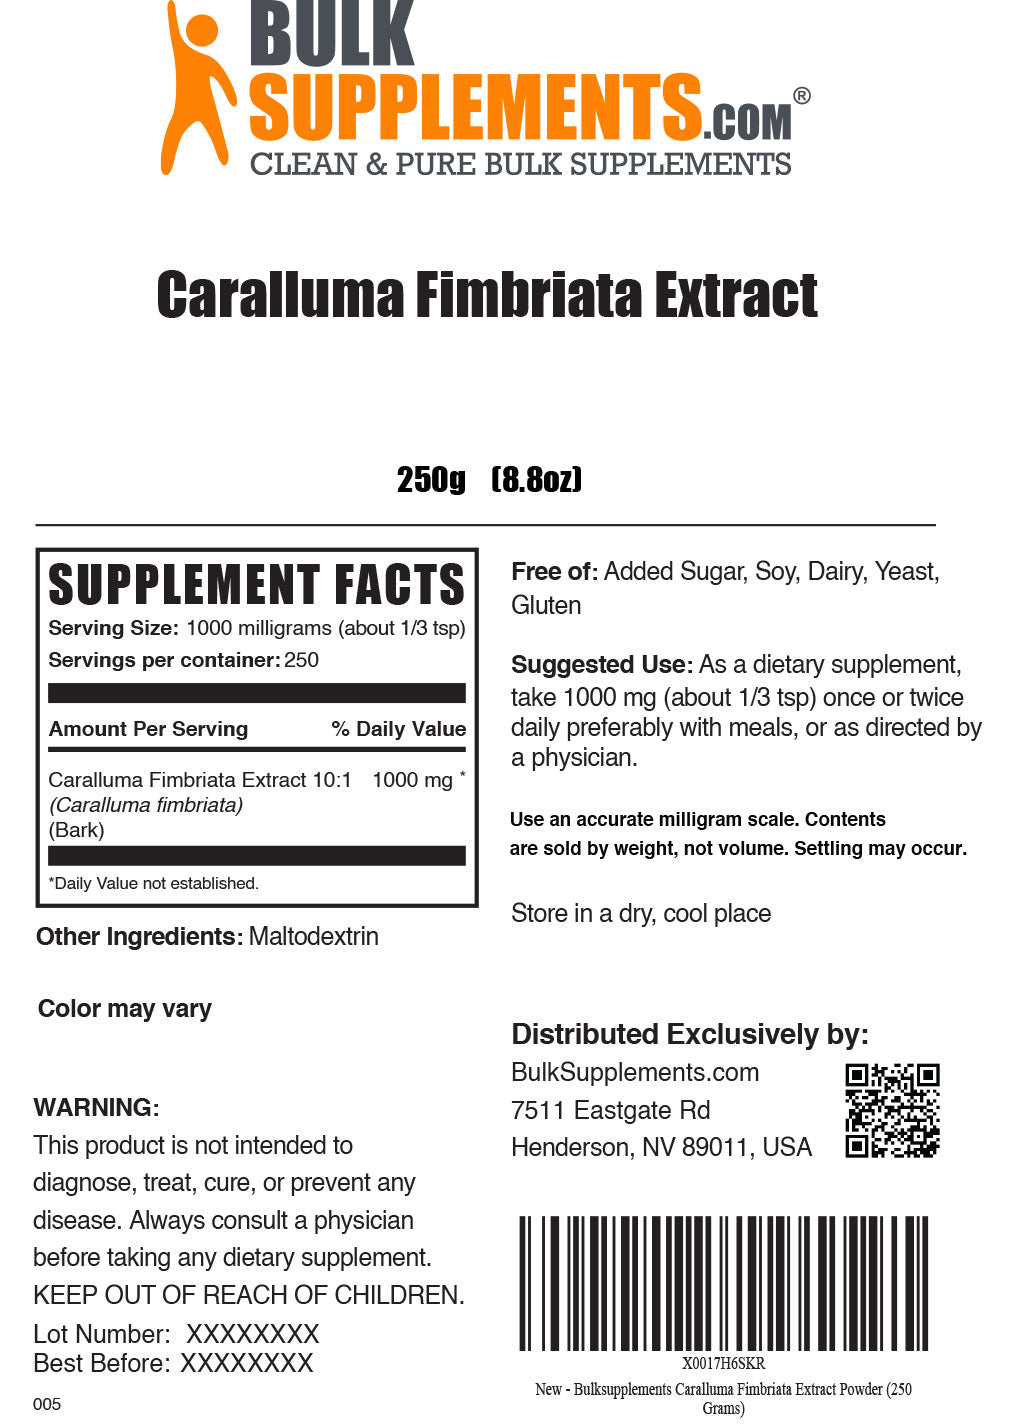 Caralluma Fimbriata Extract powder label 250g